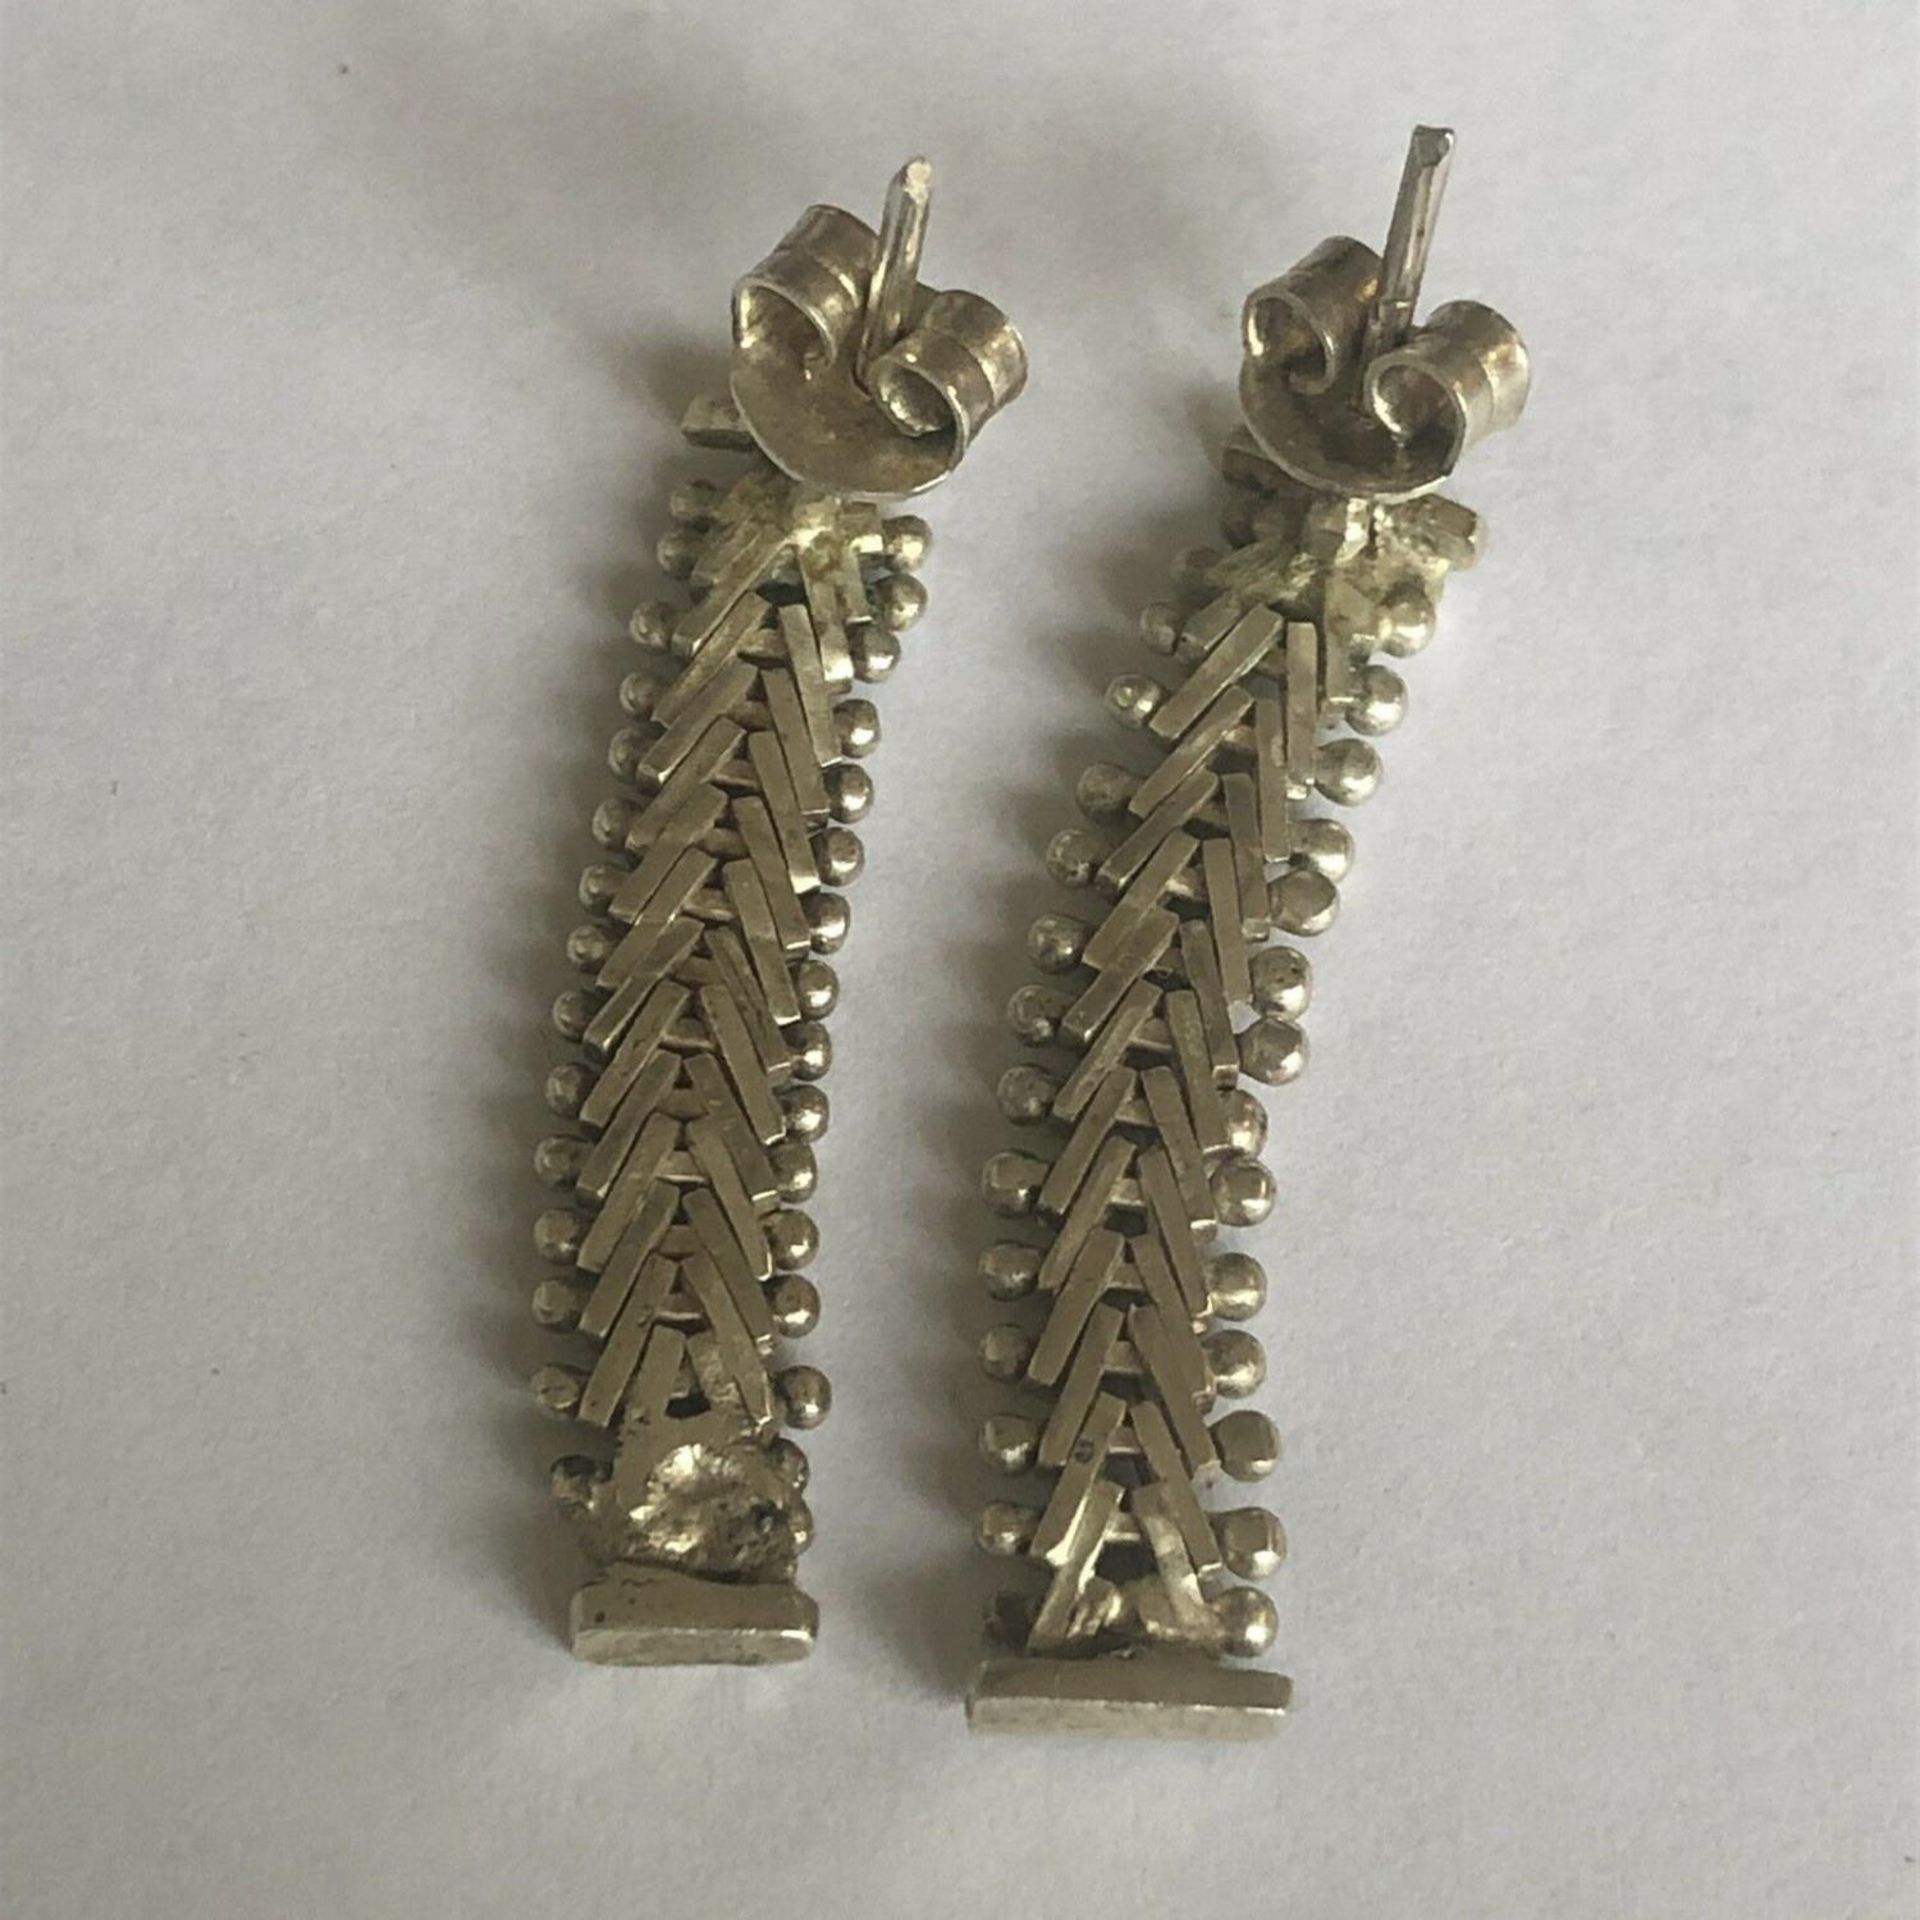 Vintage Modernist Handmade Silver 925 earrings - Image 2 of 3